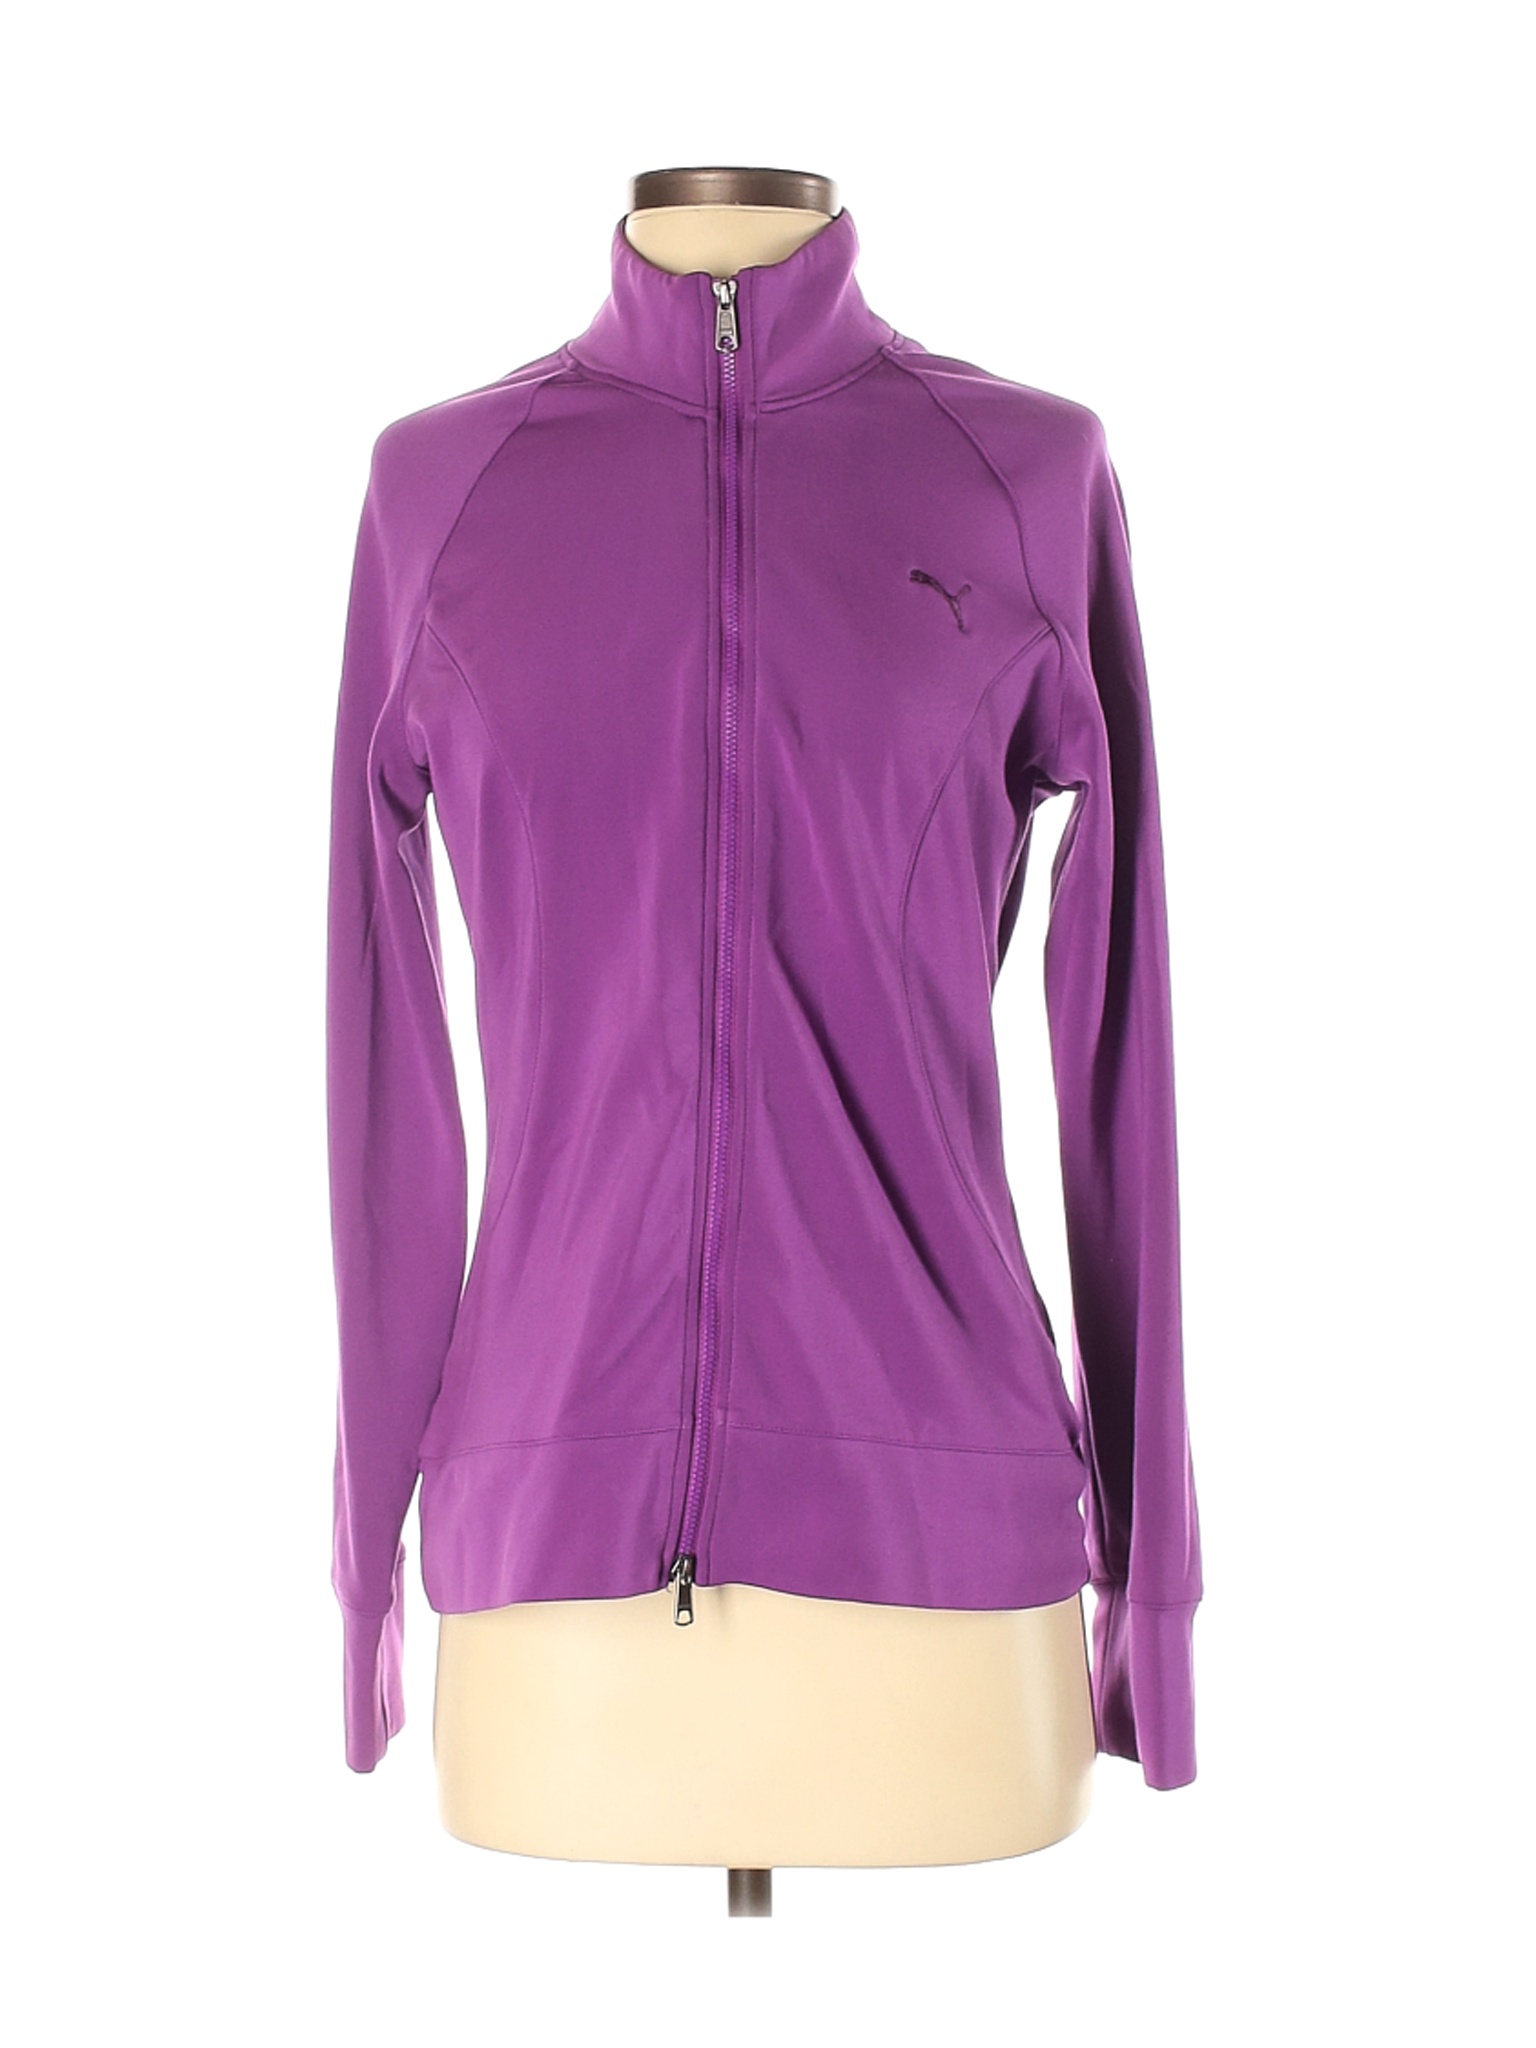 Puma Women Purple Track Jacket S | eBay